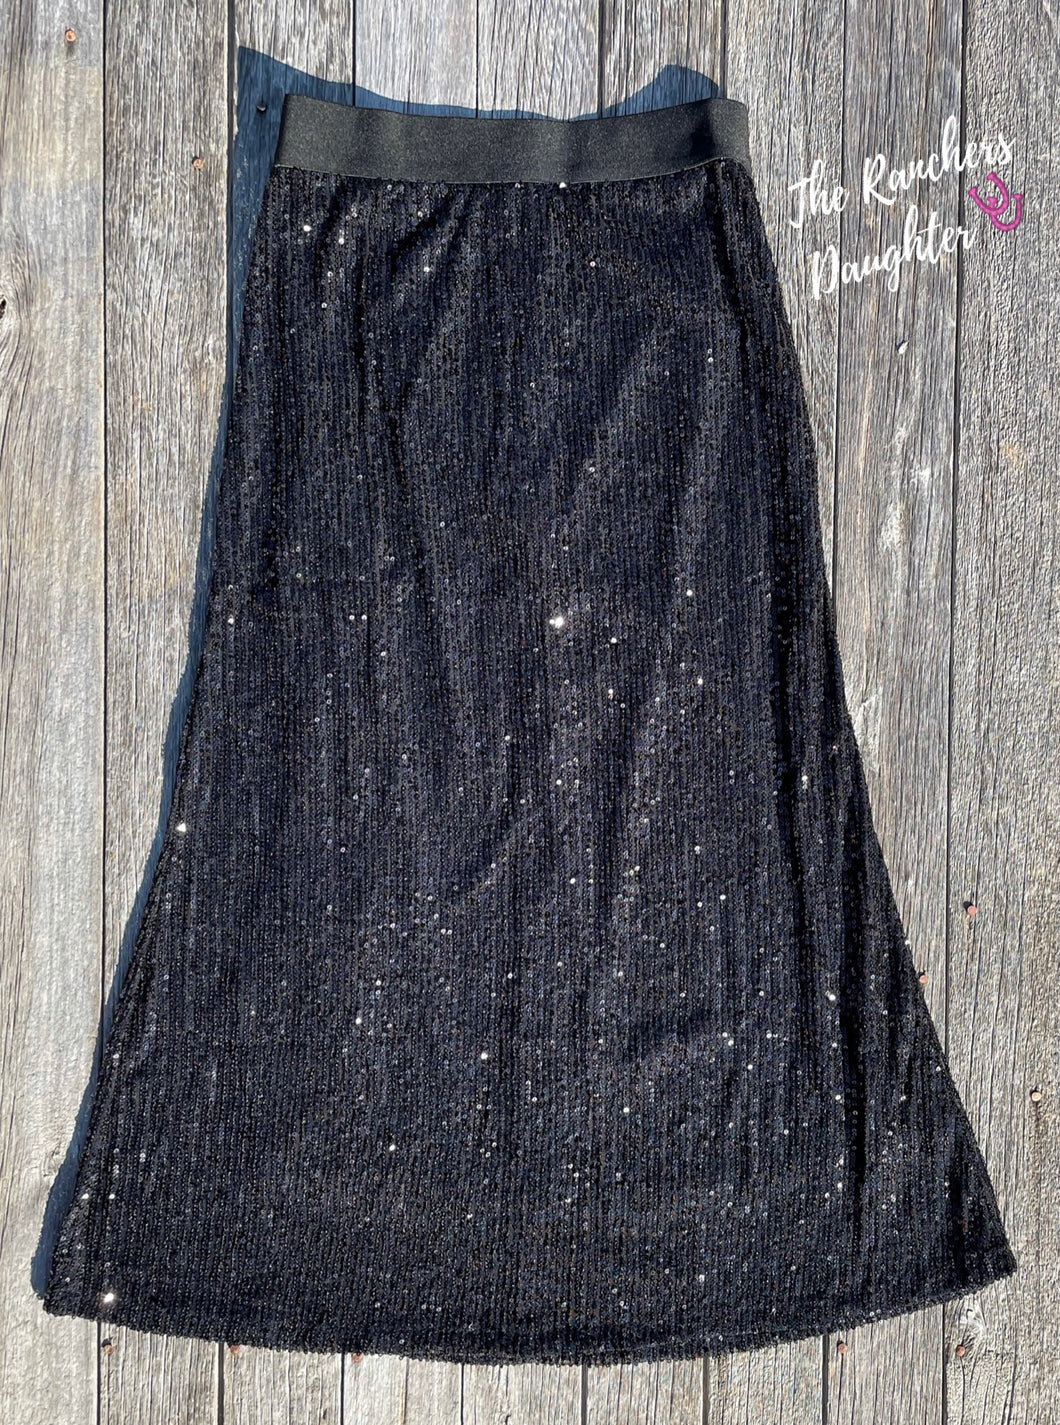 Black Sequin High Waist Midi Skirt